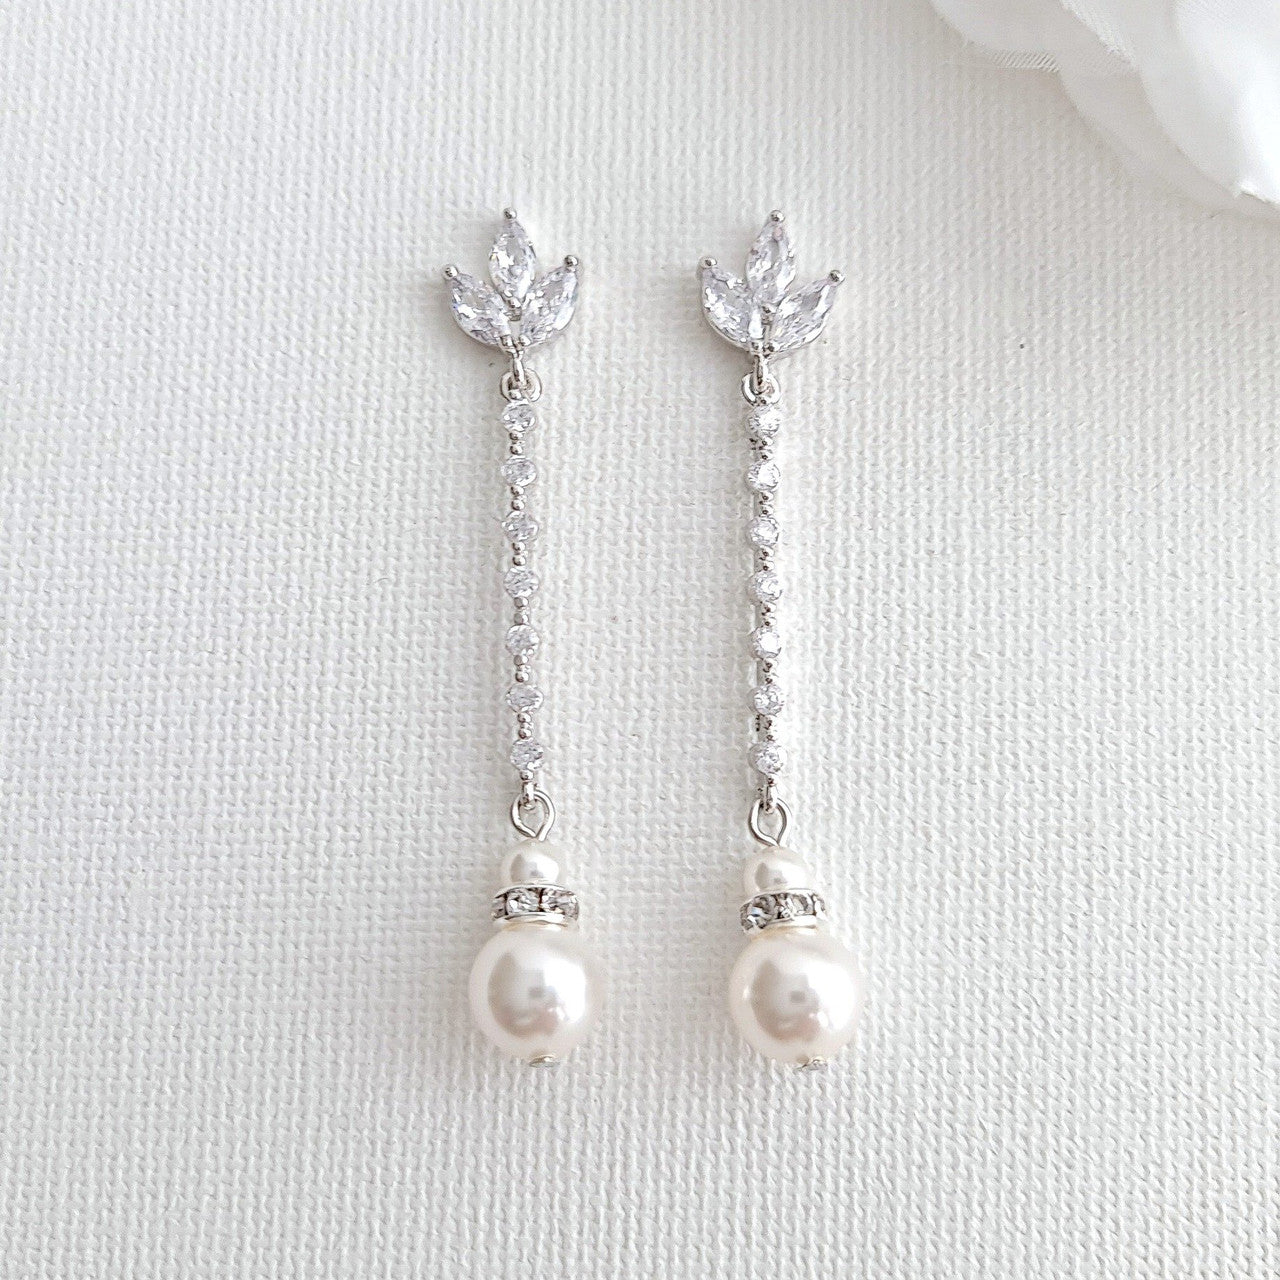 Skinny Long Pearl Drop Earrings in Rose Gold -Jodi